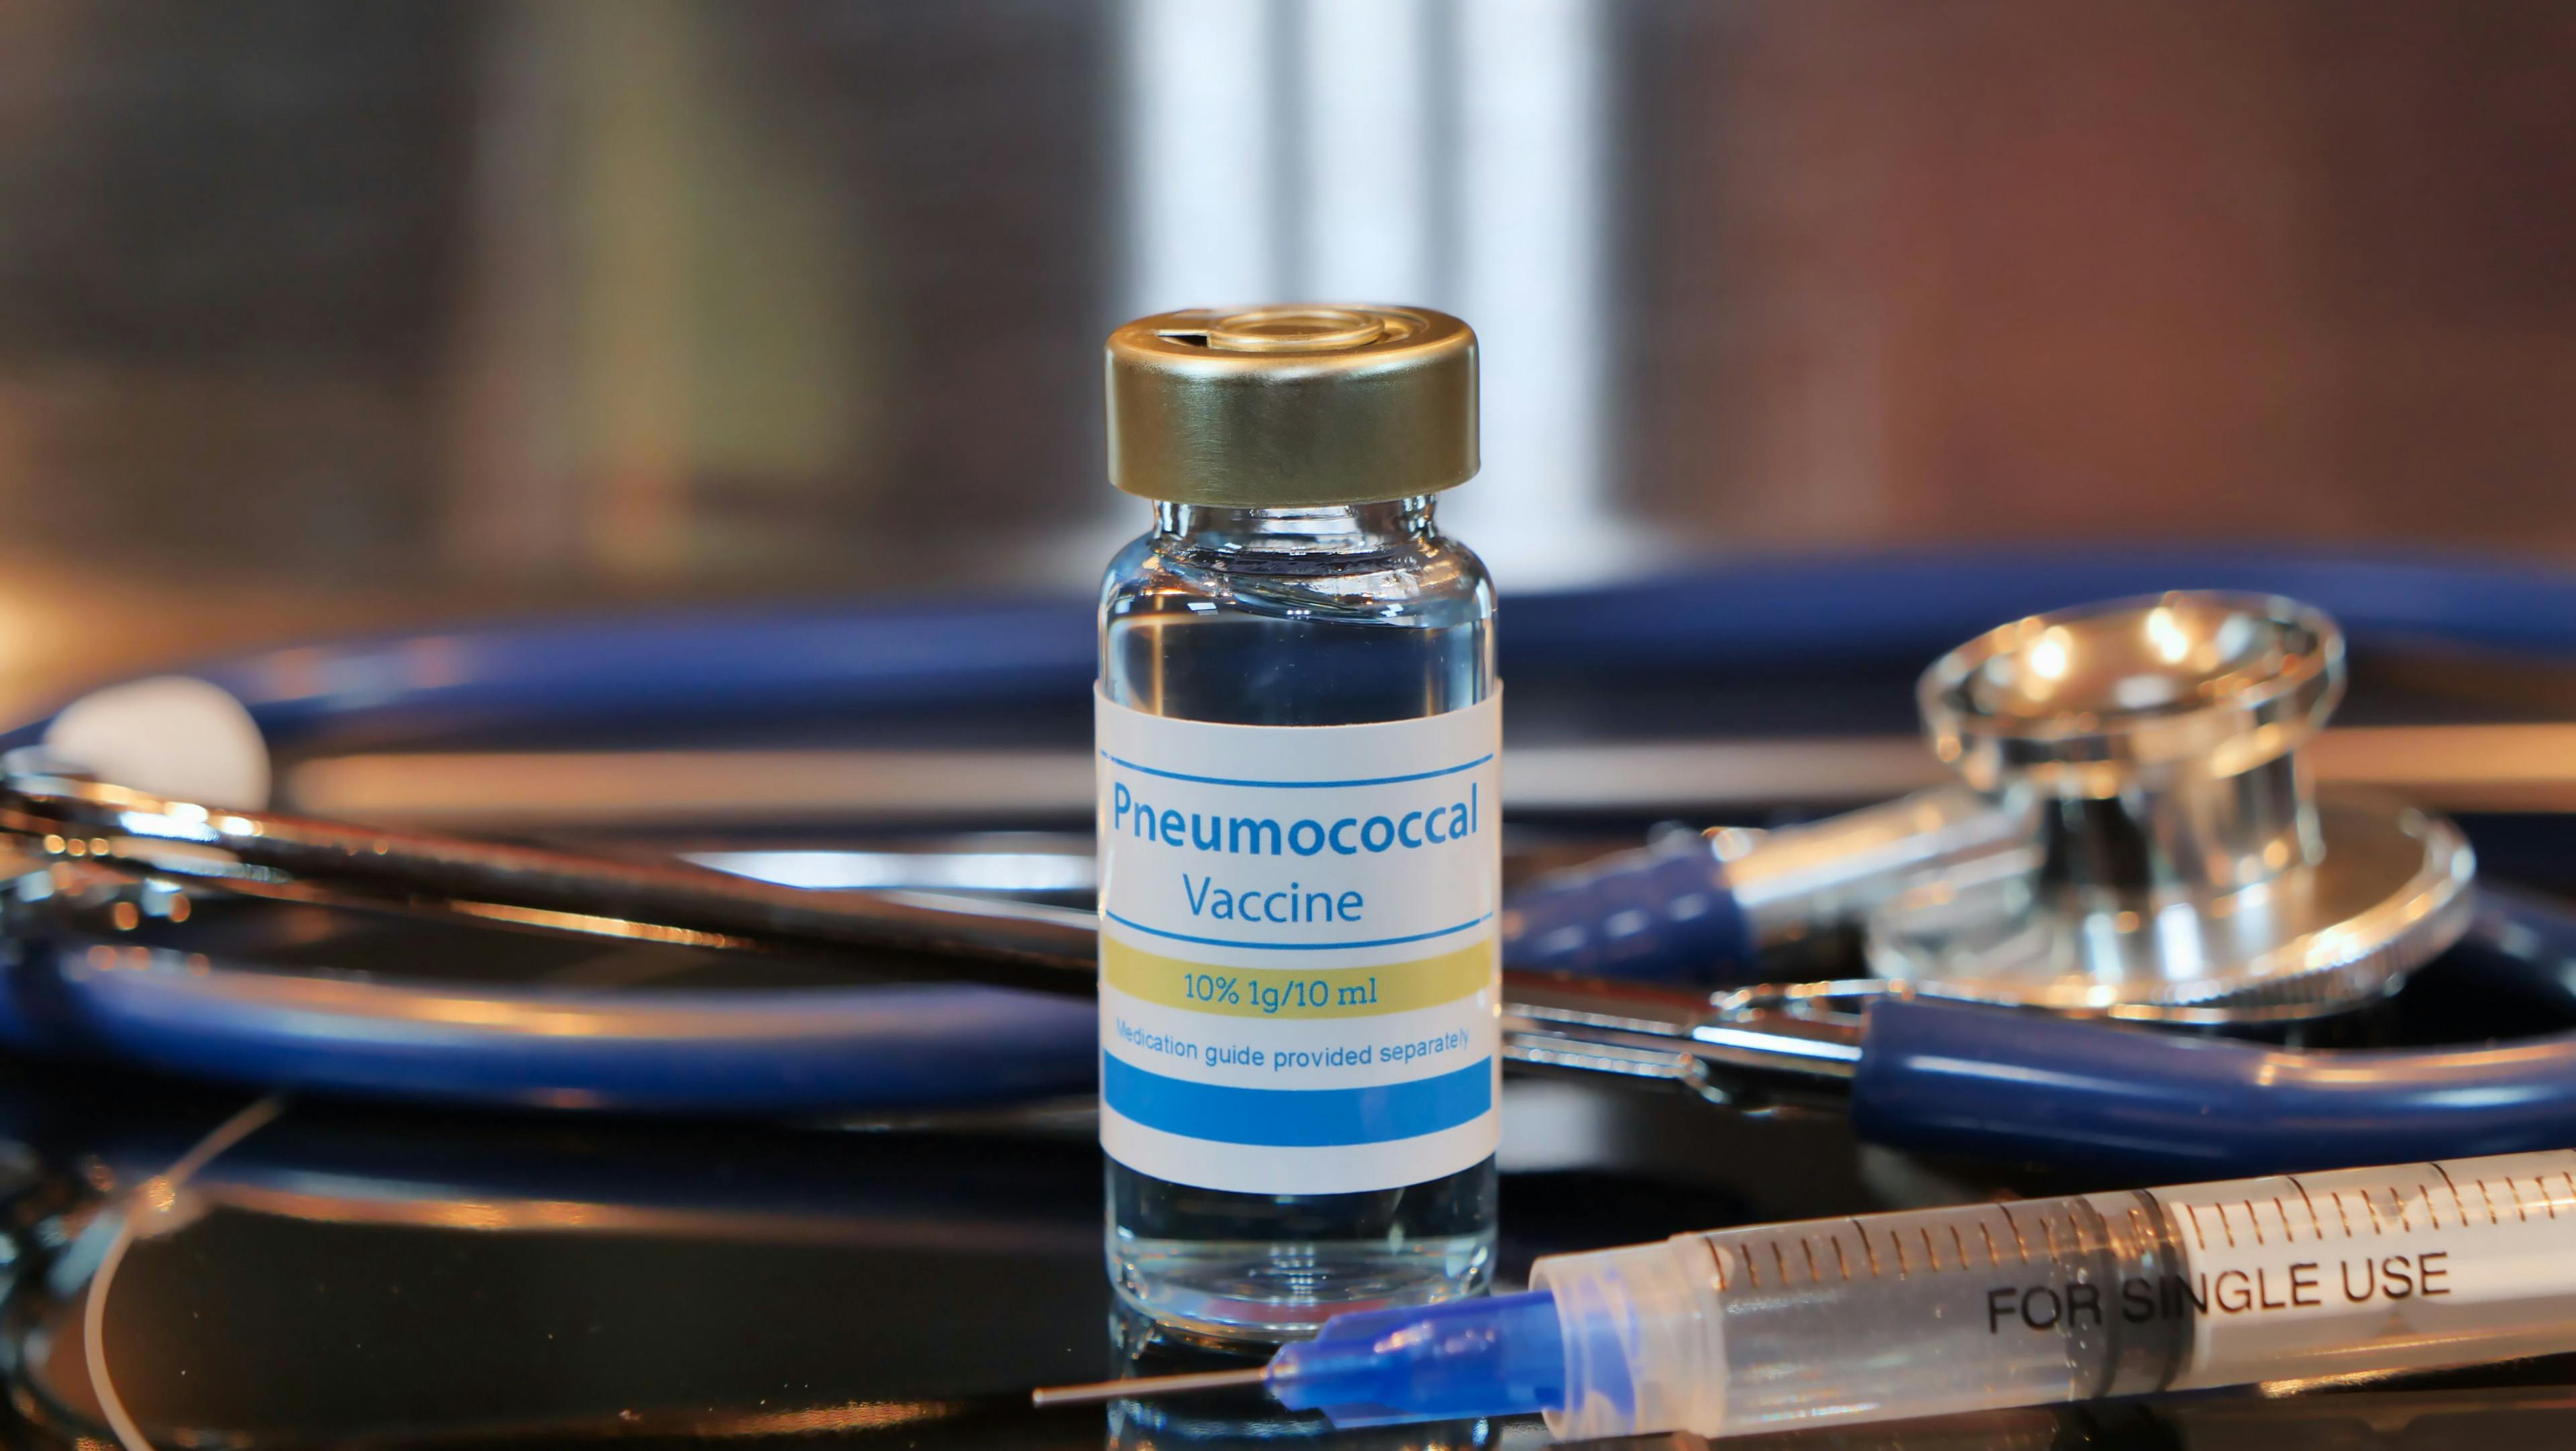 Vial of Pneumococcal vaccine | Image Credit: Bernard Chantal - stock.adobe.com